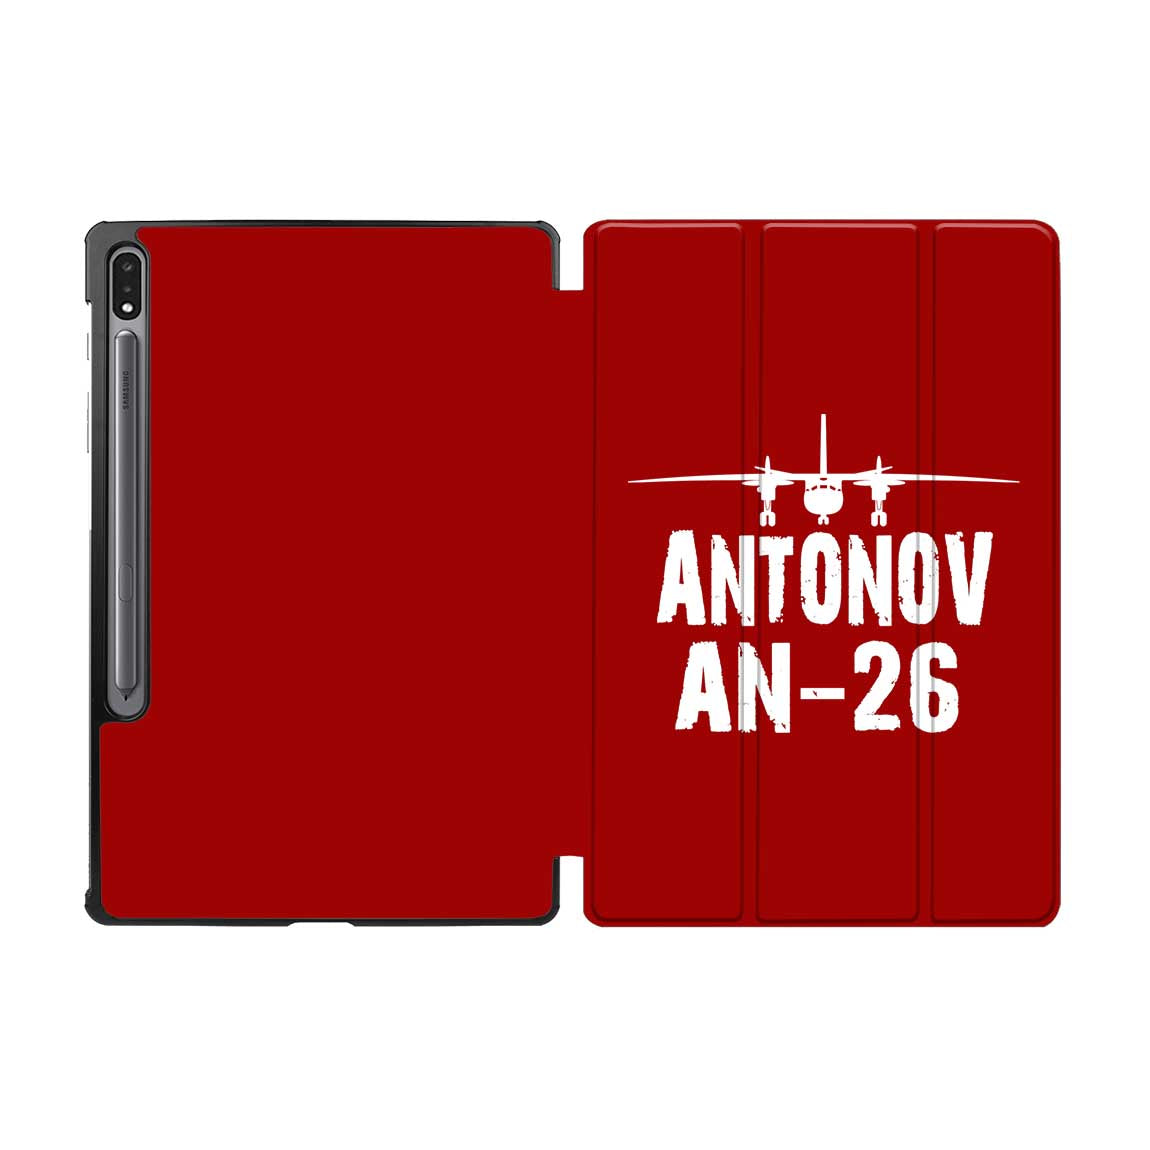 Antonov AN-26 & Plane Designed Samsung Tablet Cases